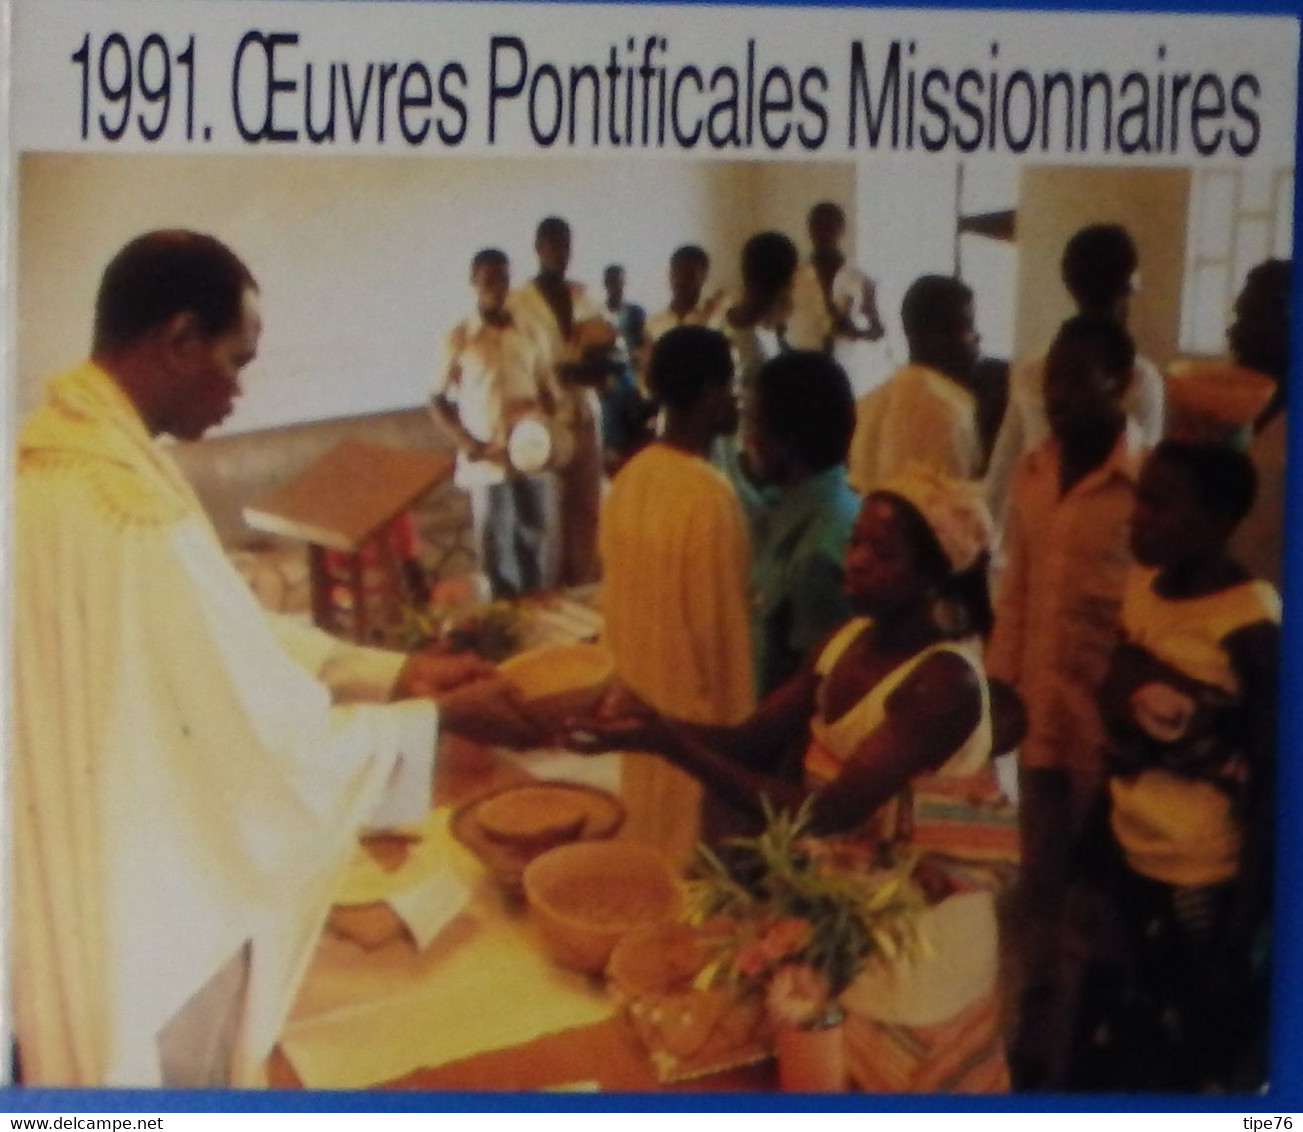 Petit Calendrier De Poche 1991 Oeuvres Pontificales  Missionnaires - Grand Format : 1991-00